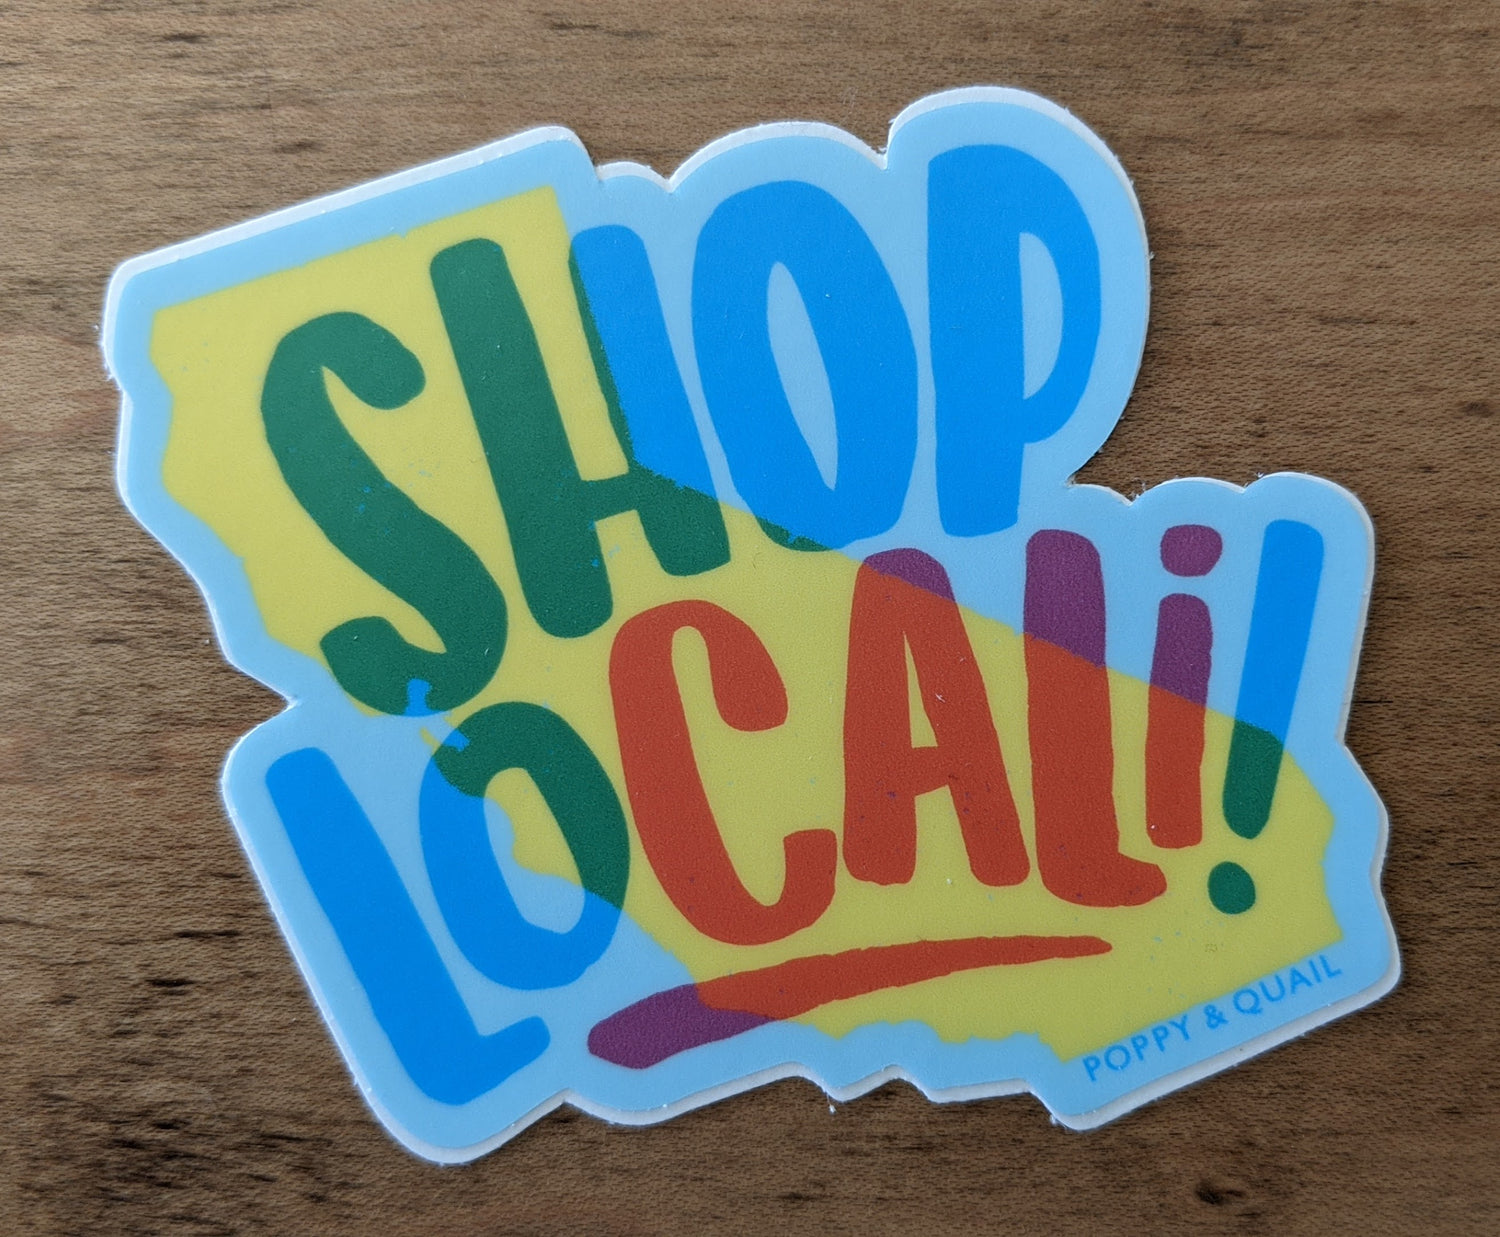 California state sticker reading "Shop Locali!" by Poppy & Quail